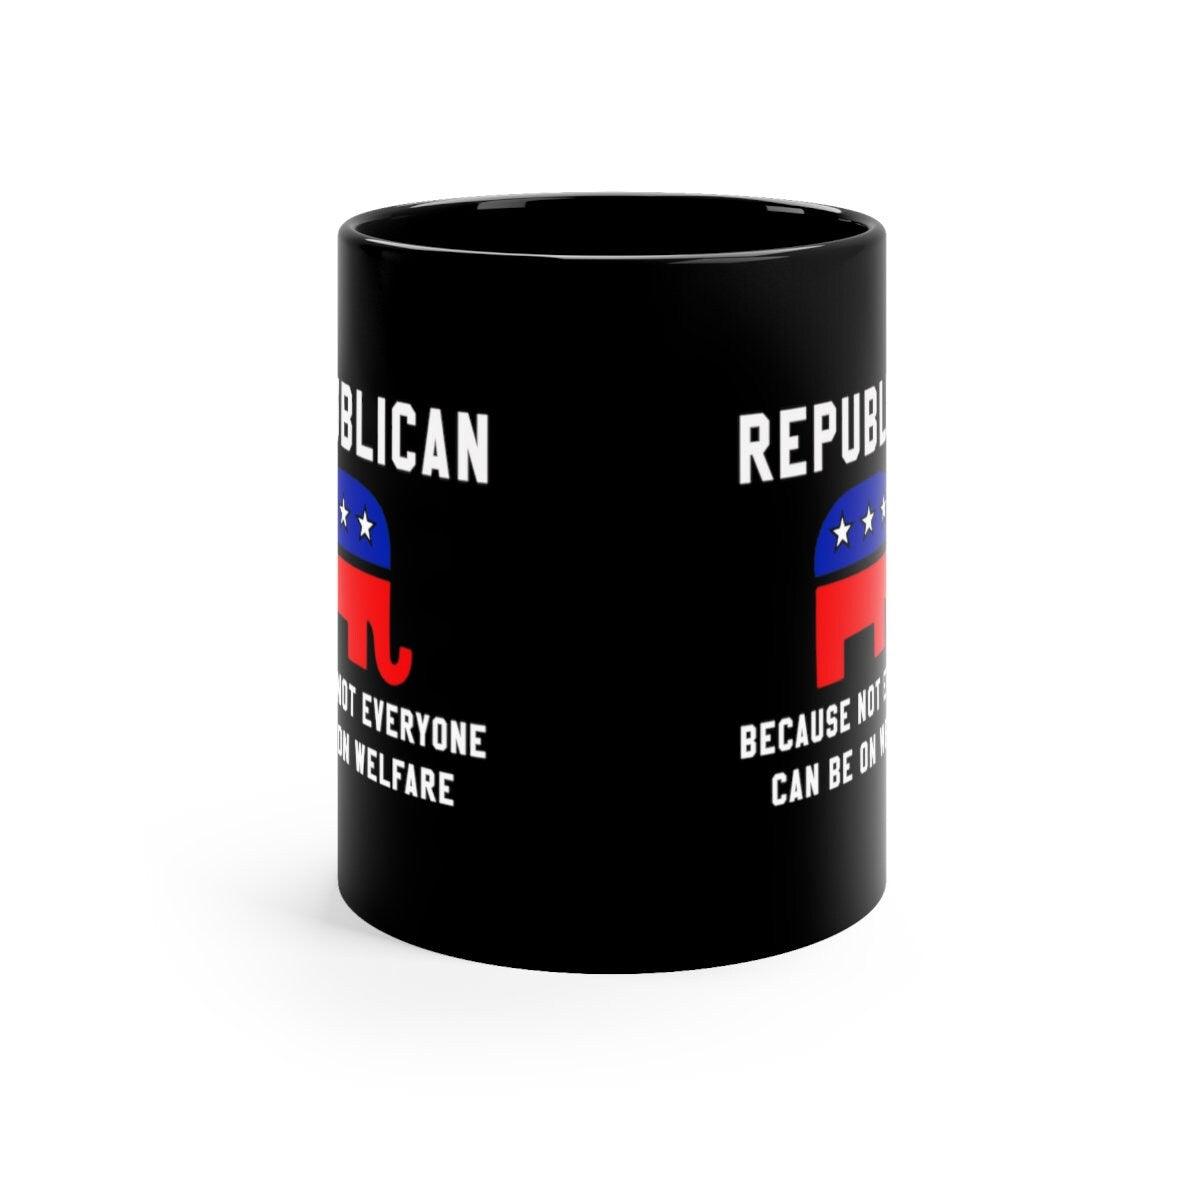 Republican because not everyone can be on welfare Coffee, Republican Gift, Political Mug, Raised Republican, Elephant Graphic,politcial Mug - plusminusco.com